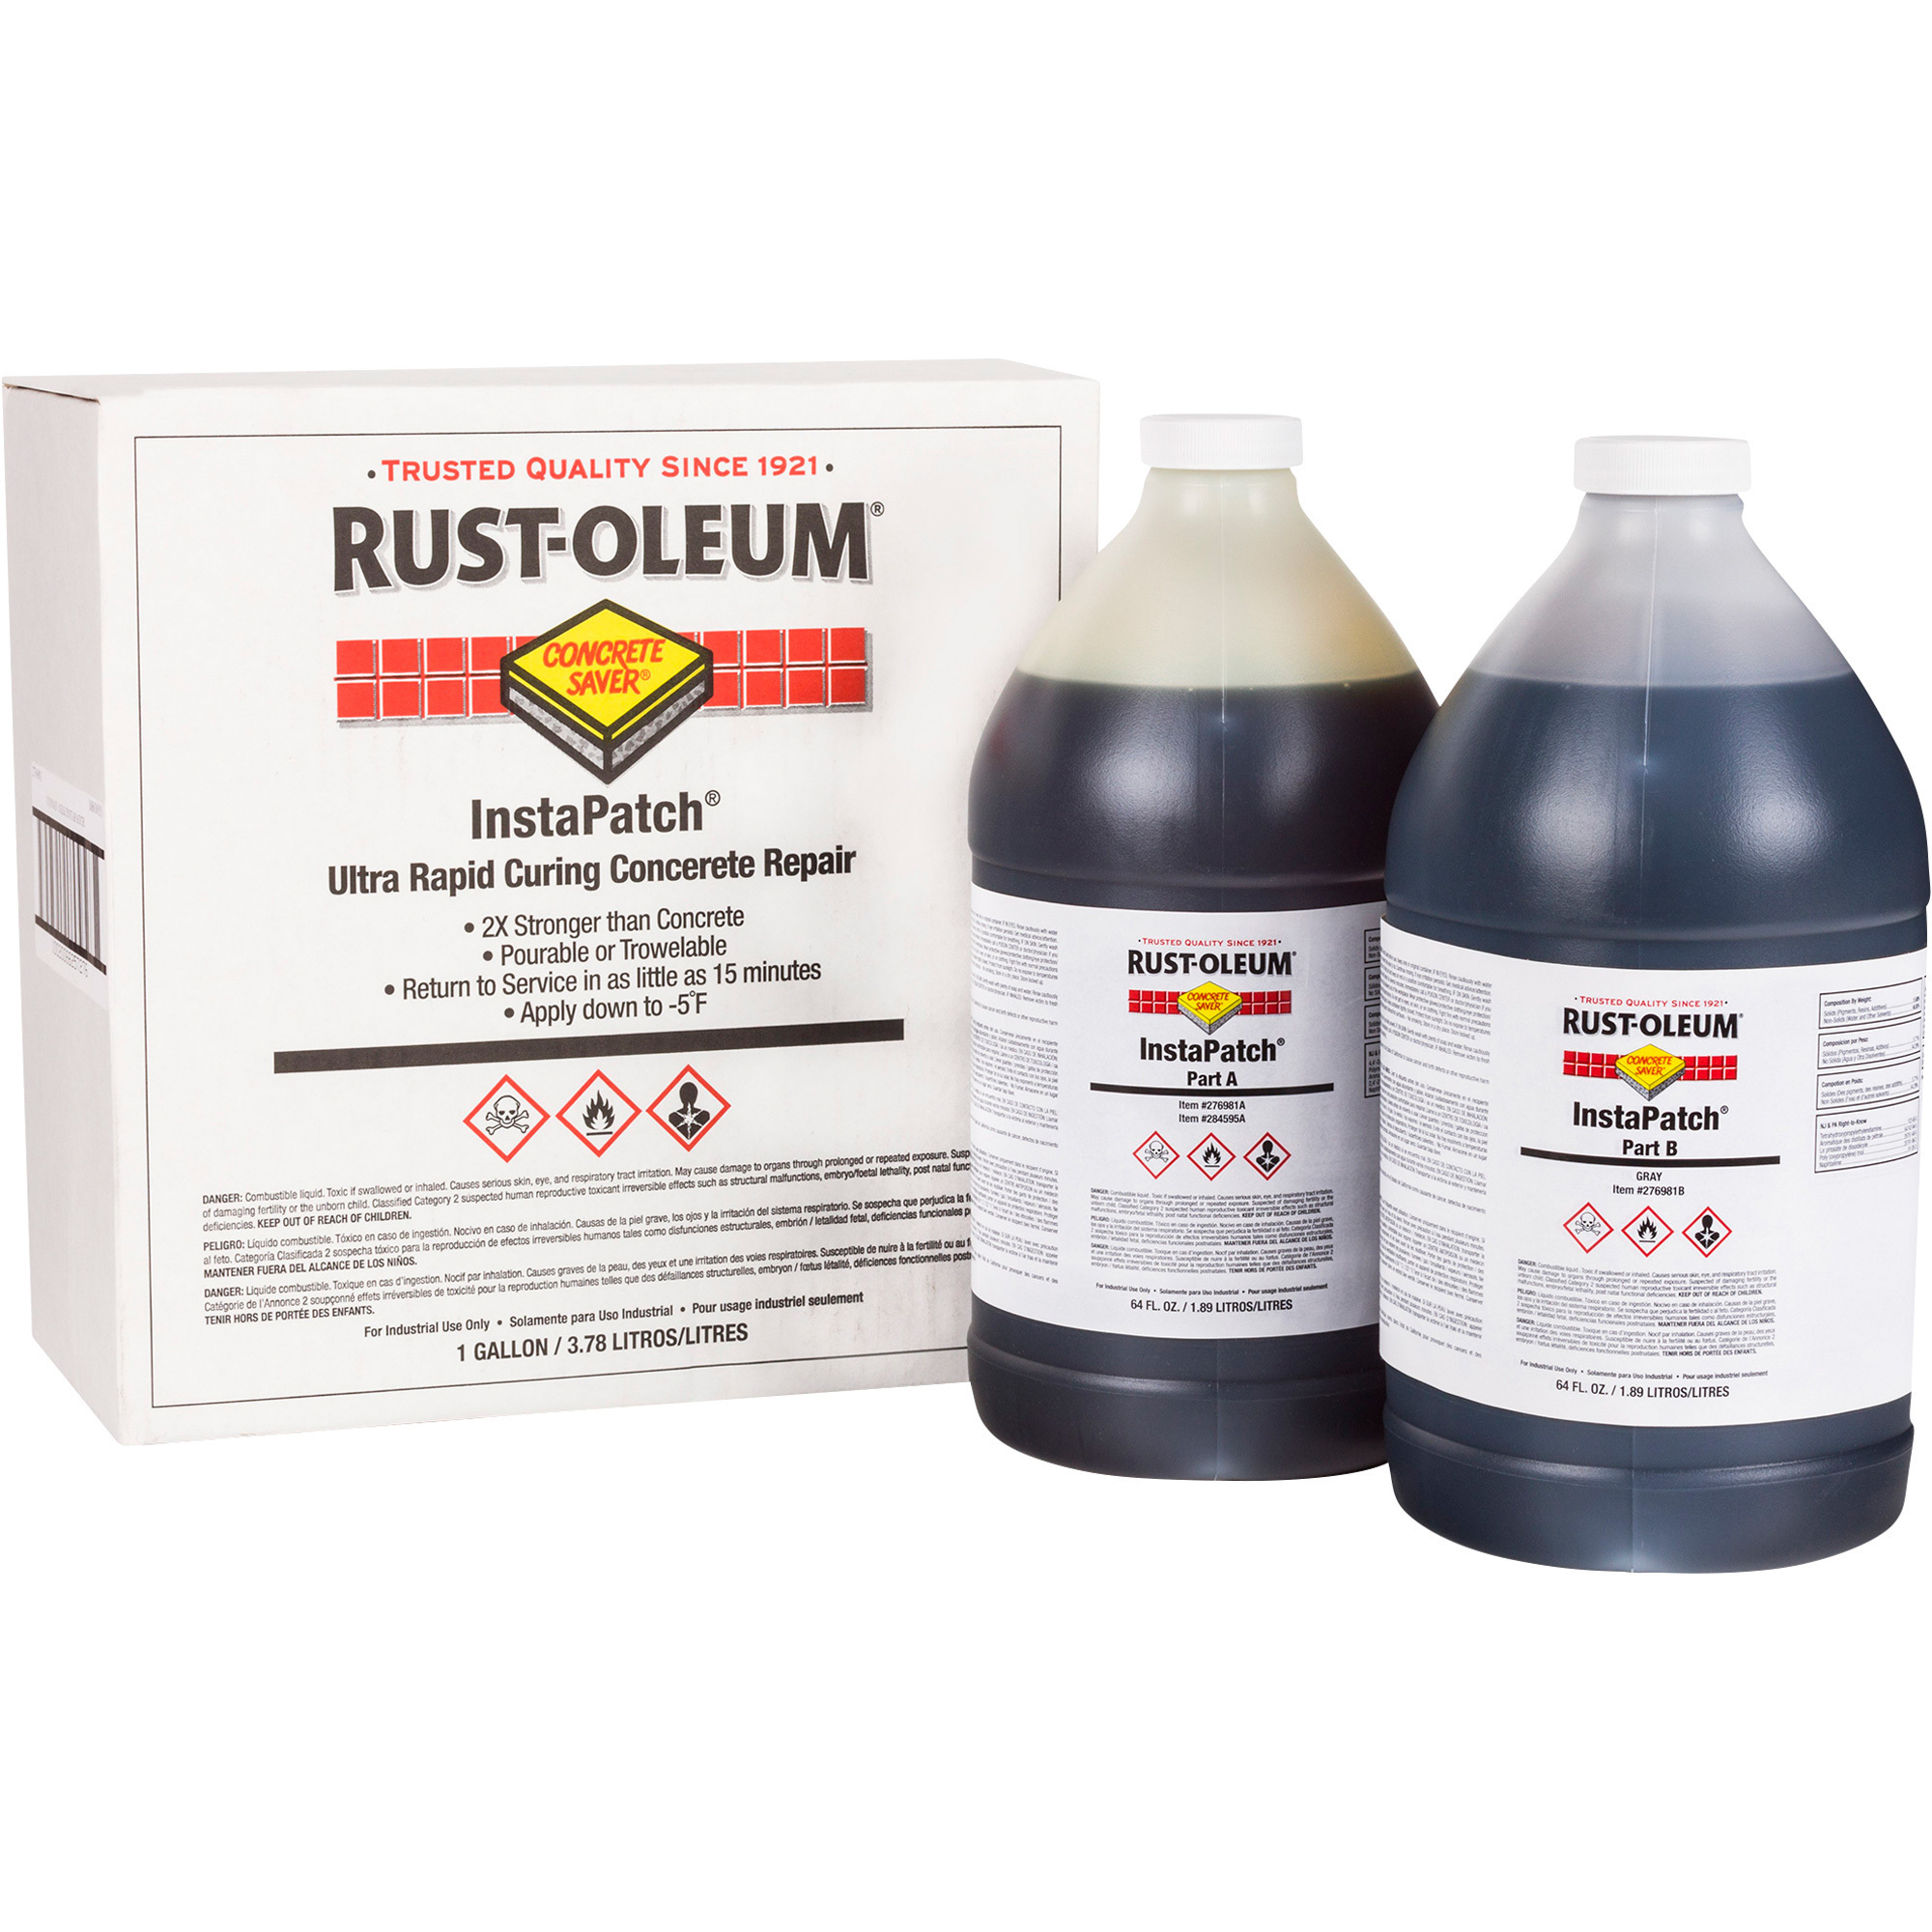 Rust-Oleum InstaPatch Ultra Rapid Curing Concrete Repair â 1-Gallon Kit, Gray